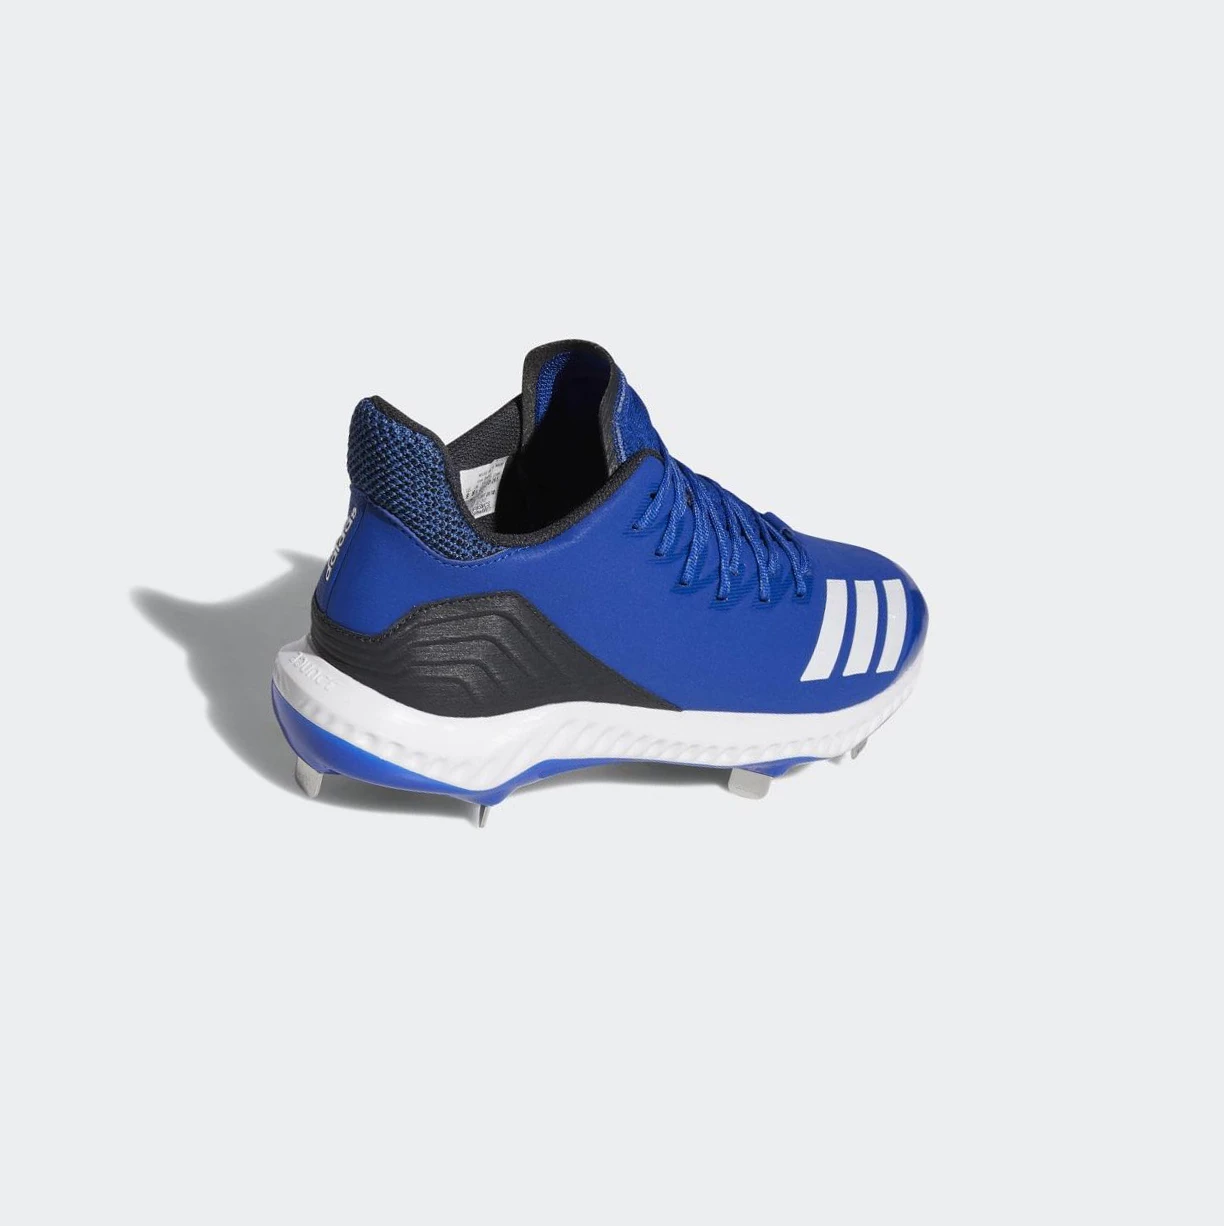 Baseballové Topanky Adidas Icon Bounce Panske Modre | 643SKQNGMWY